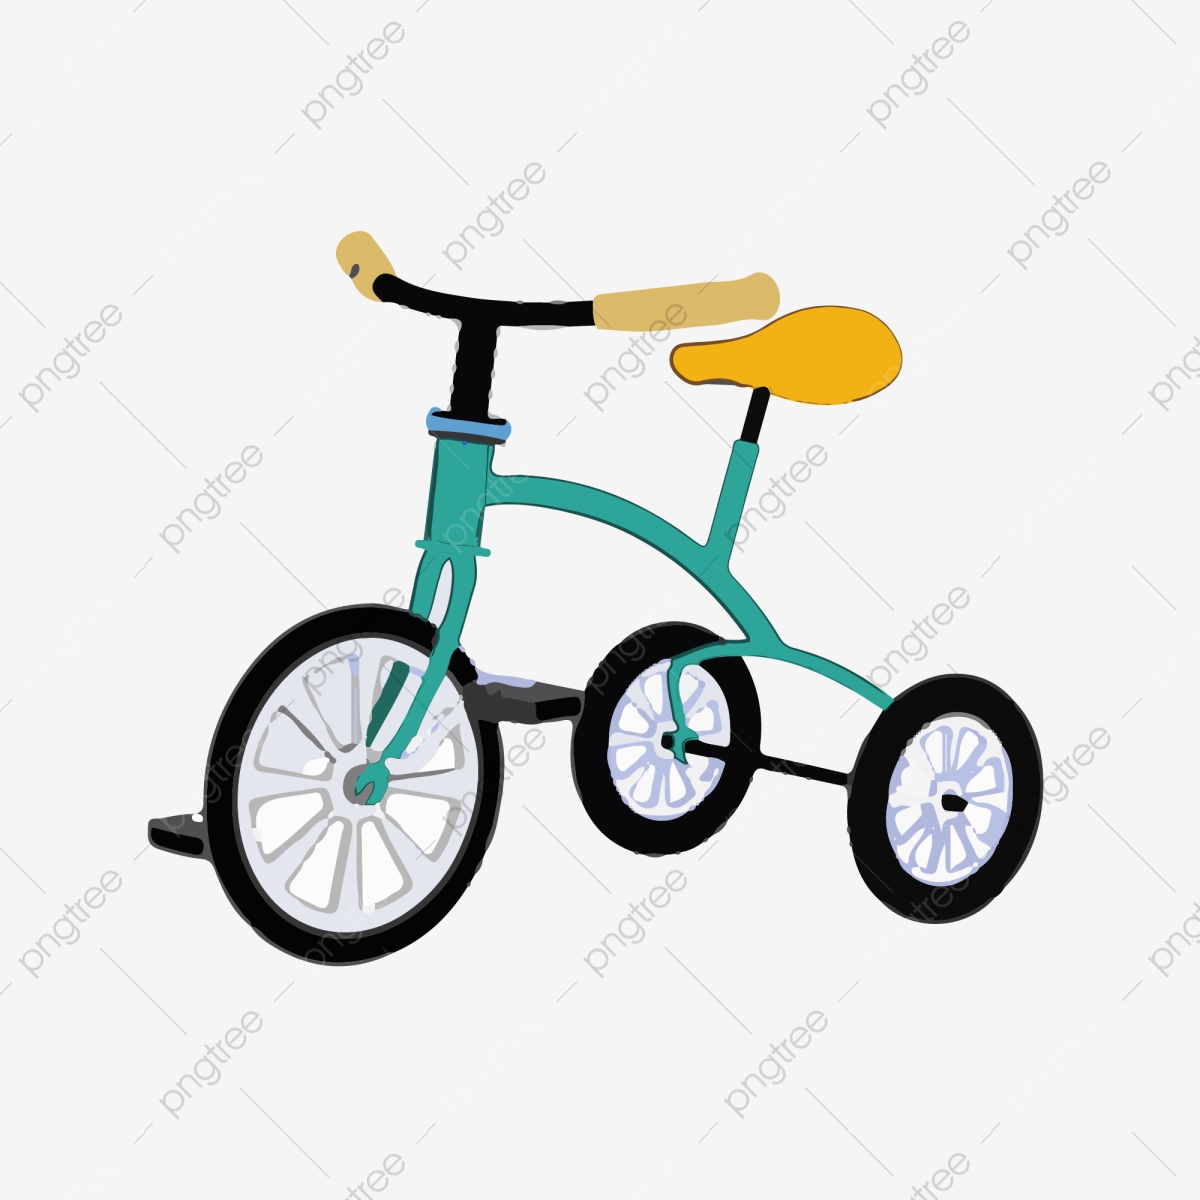 clipart bike toy